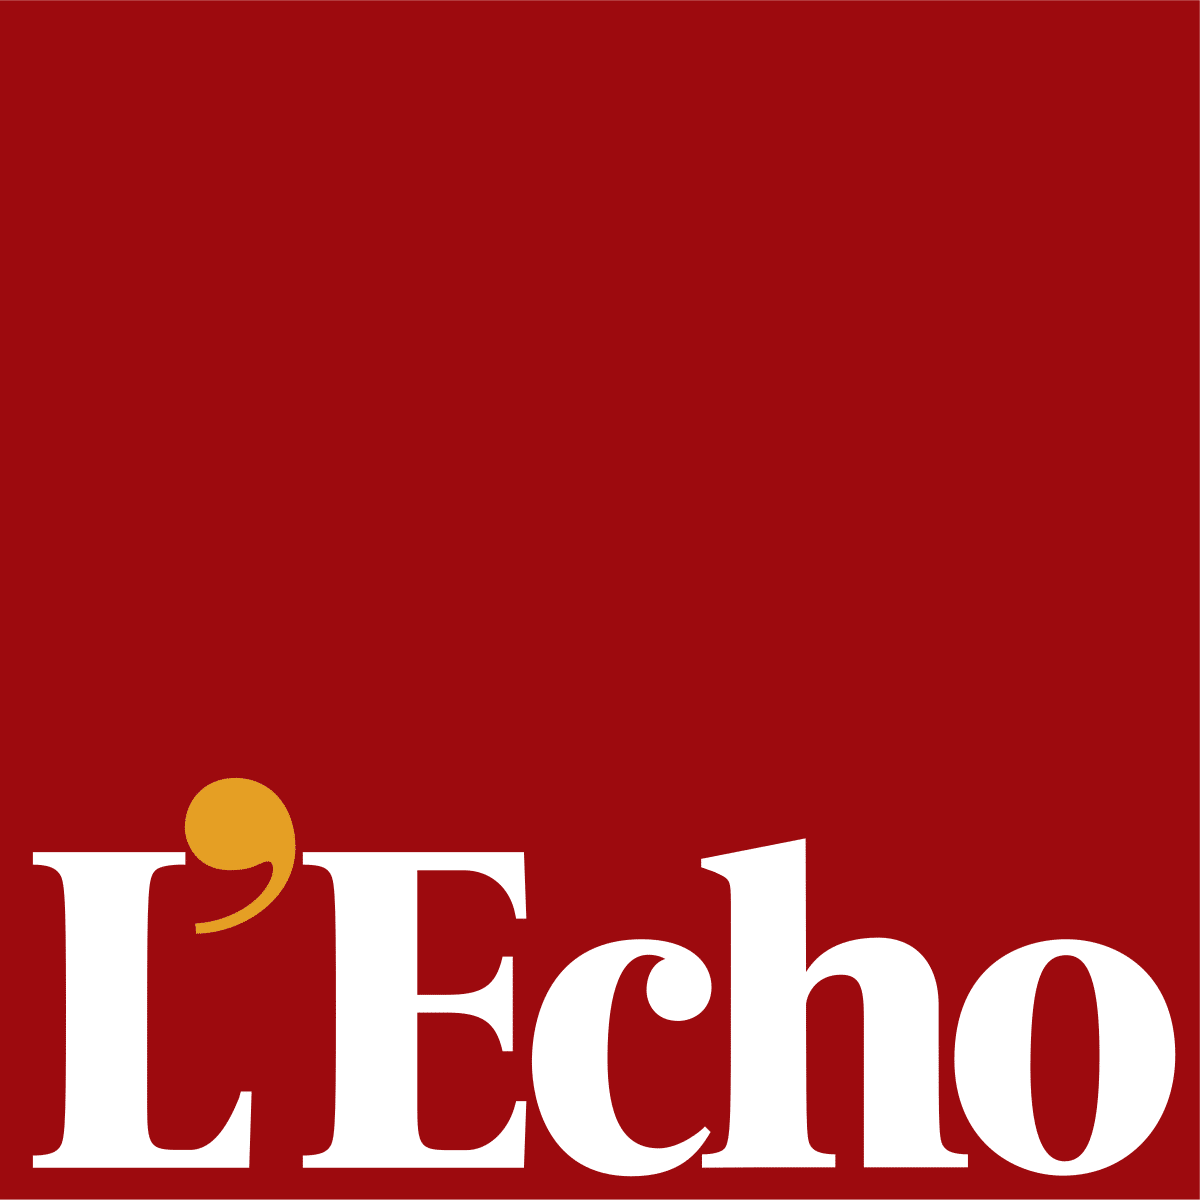 Logo of l'echo